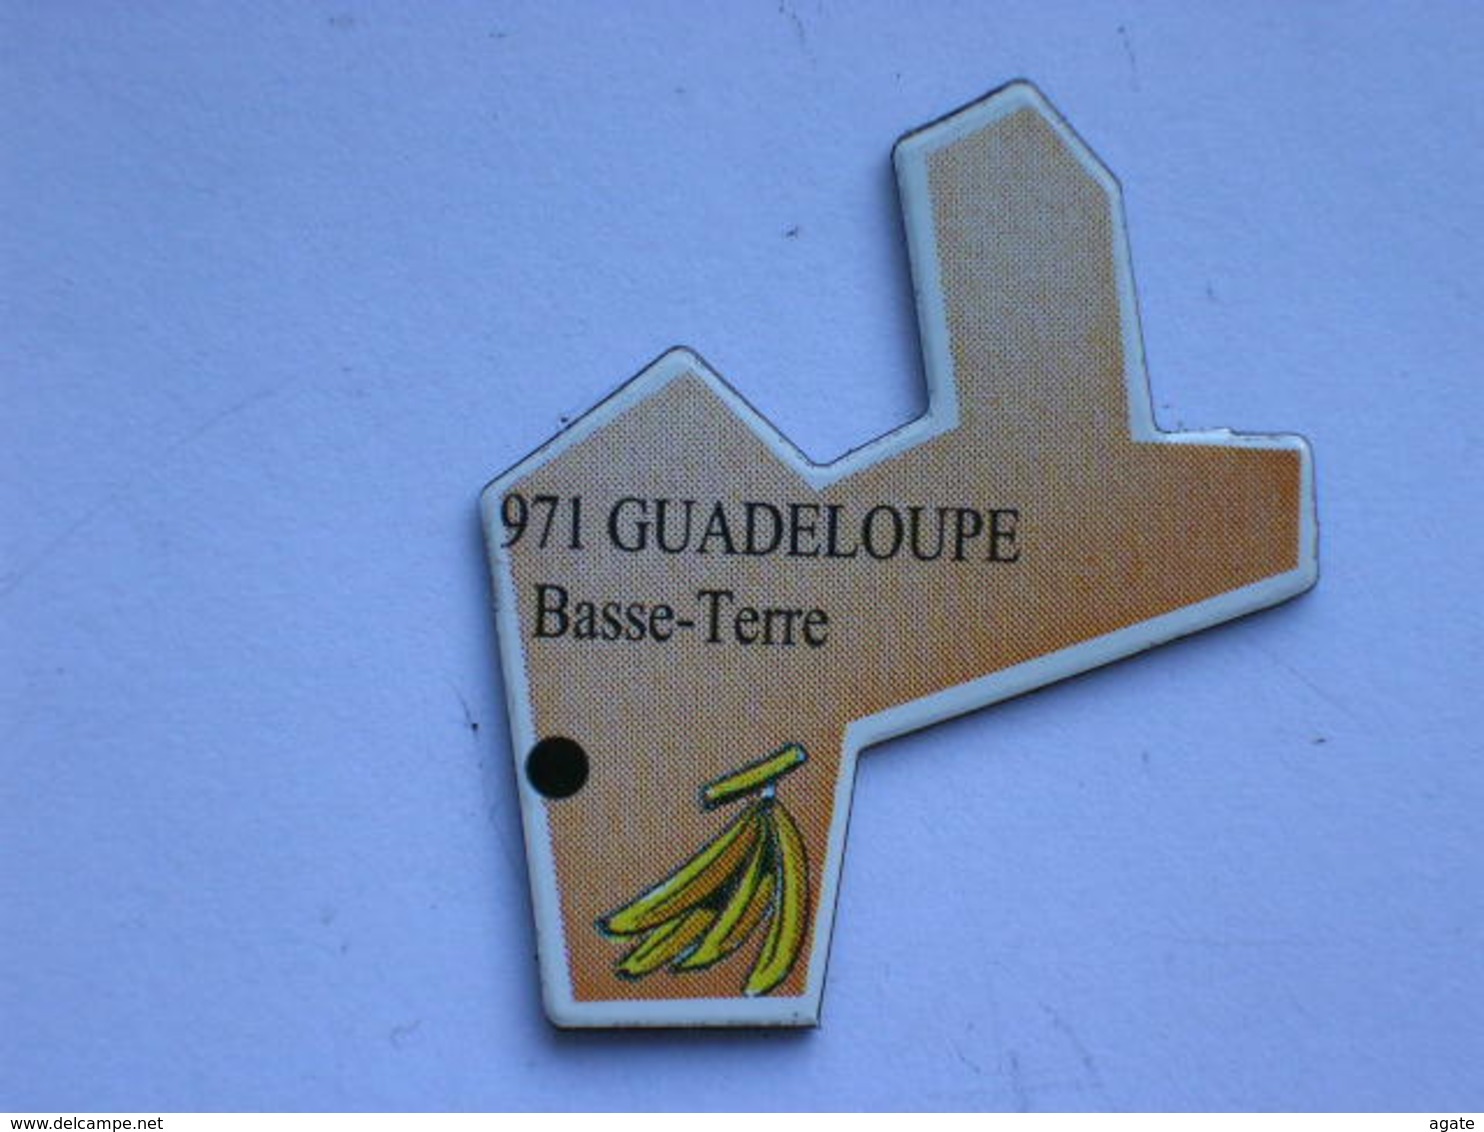 Magnet Le Gaulois DEPARTEMENT FRANCE 971 Guadeloupe - Magnets